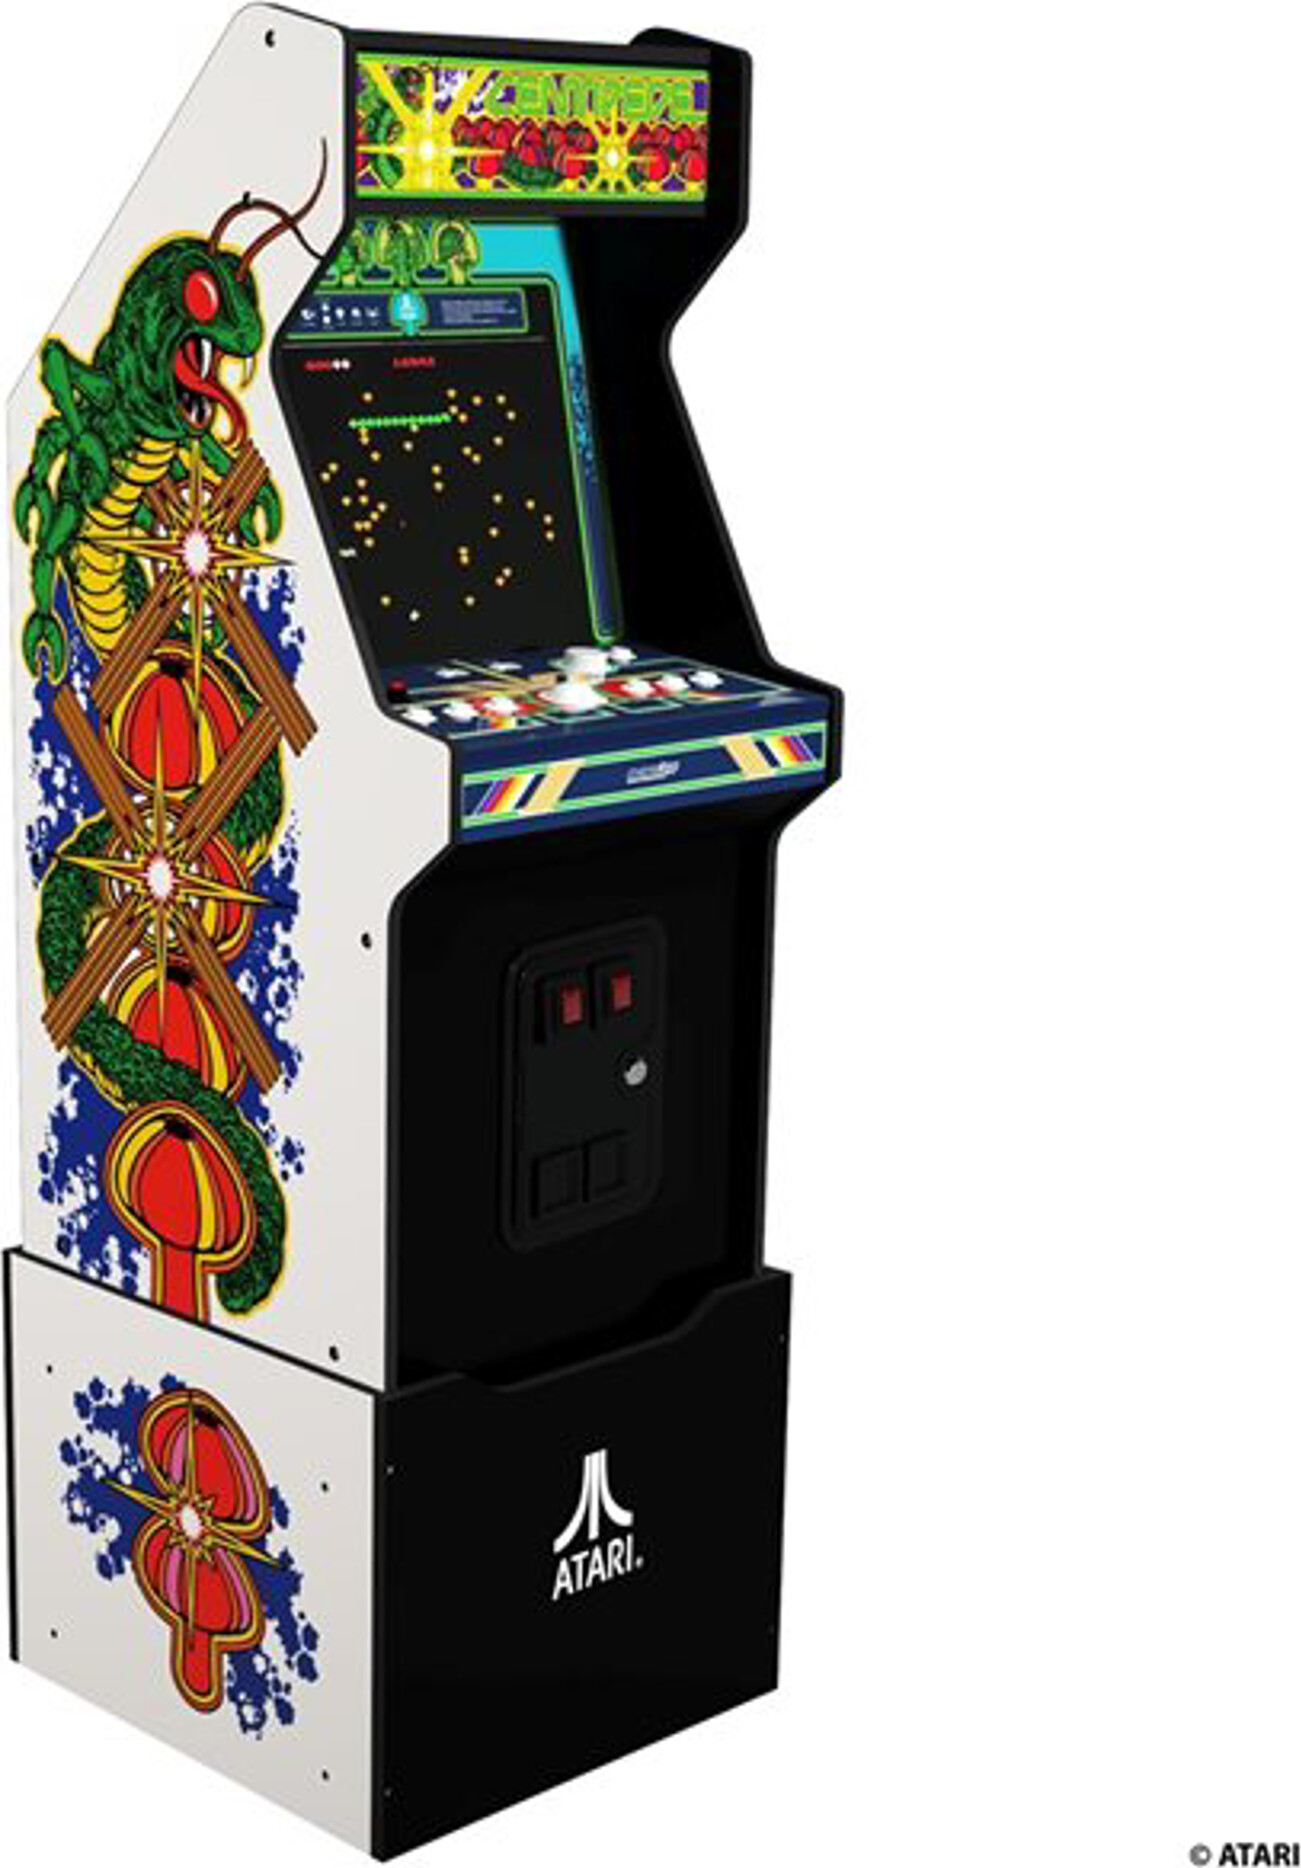 Billede af Arcade 1 Up - Atari Legacy 14-in-1 Centipede Edition Arcade Machine hos Gucca.dk